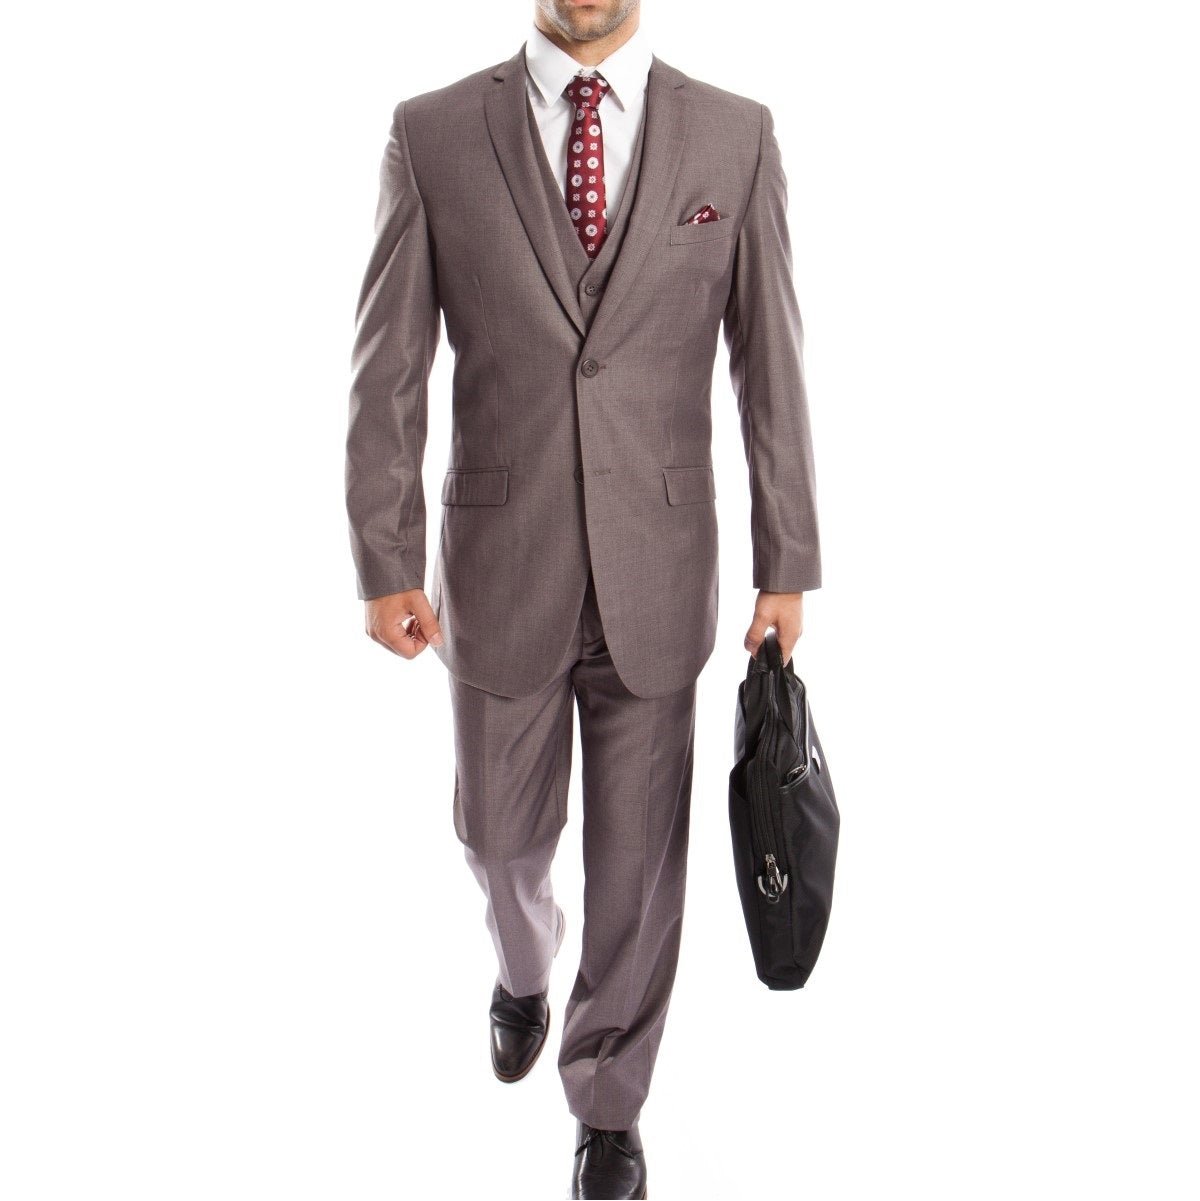 Traje Formal para Hombre TA-M154S-09 Grey - Formal Suit for Men